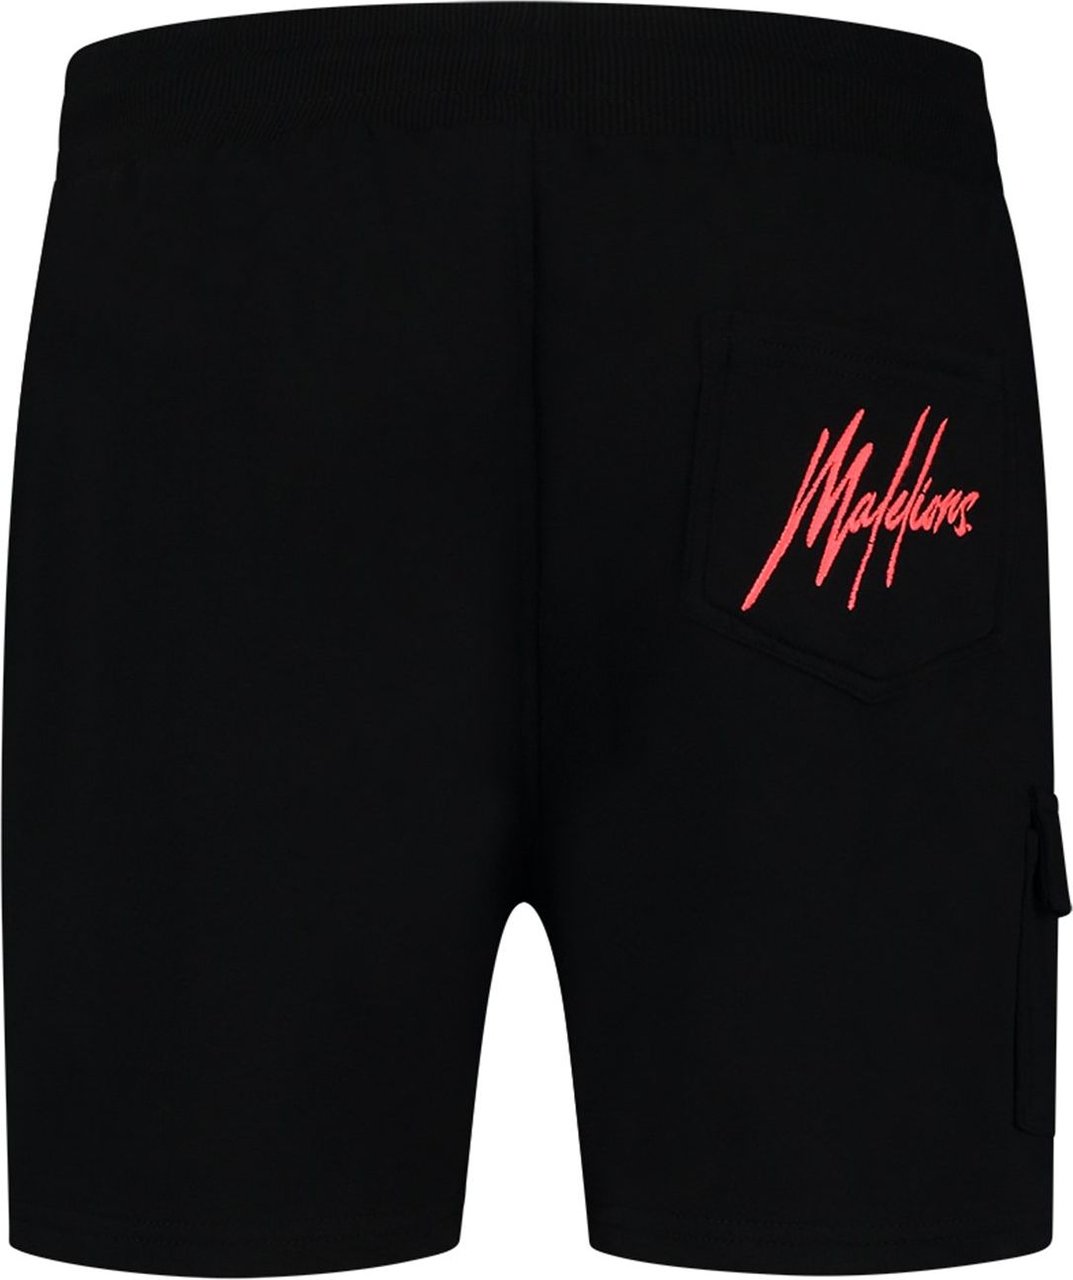 Malelions Pocket Short - Black/Neon Red Zwart